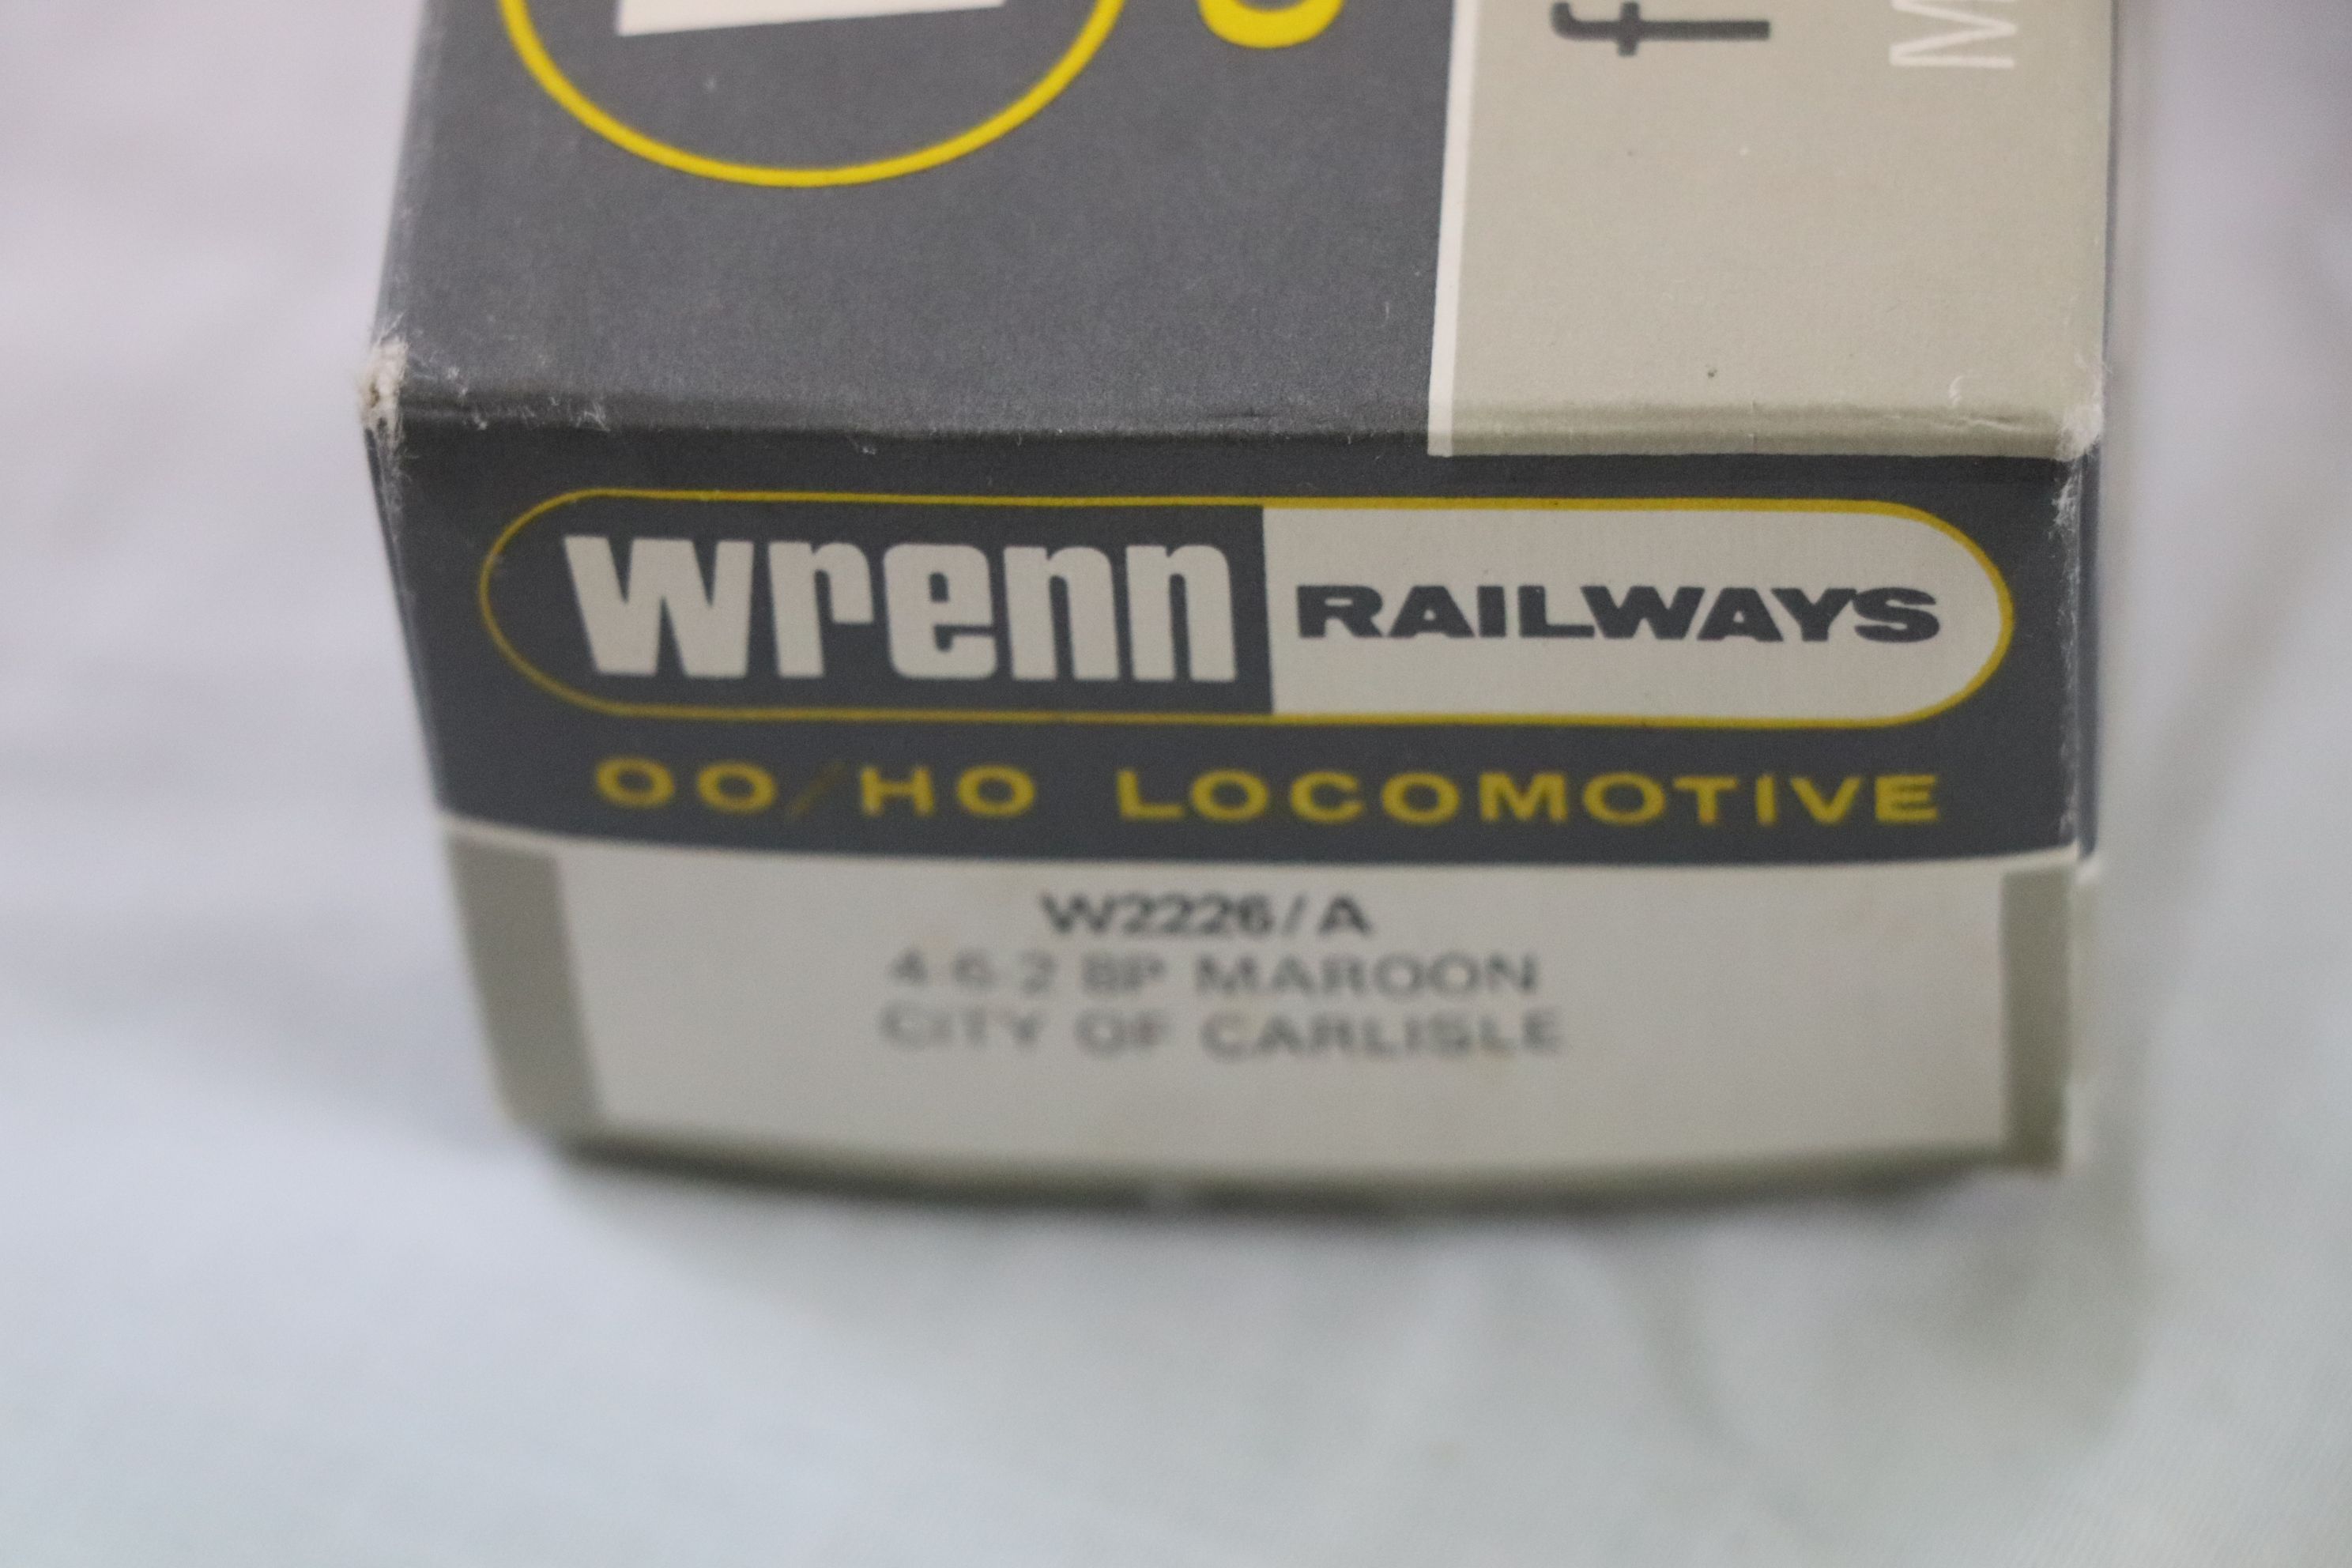 Boxed Wrenn OO gauge W2226/A 4-6-2 8P Maroon City of Carlisle locomotive - Image 2 of 2